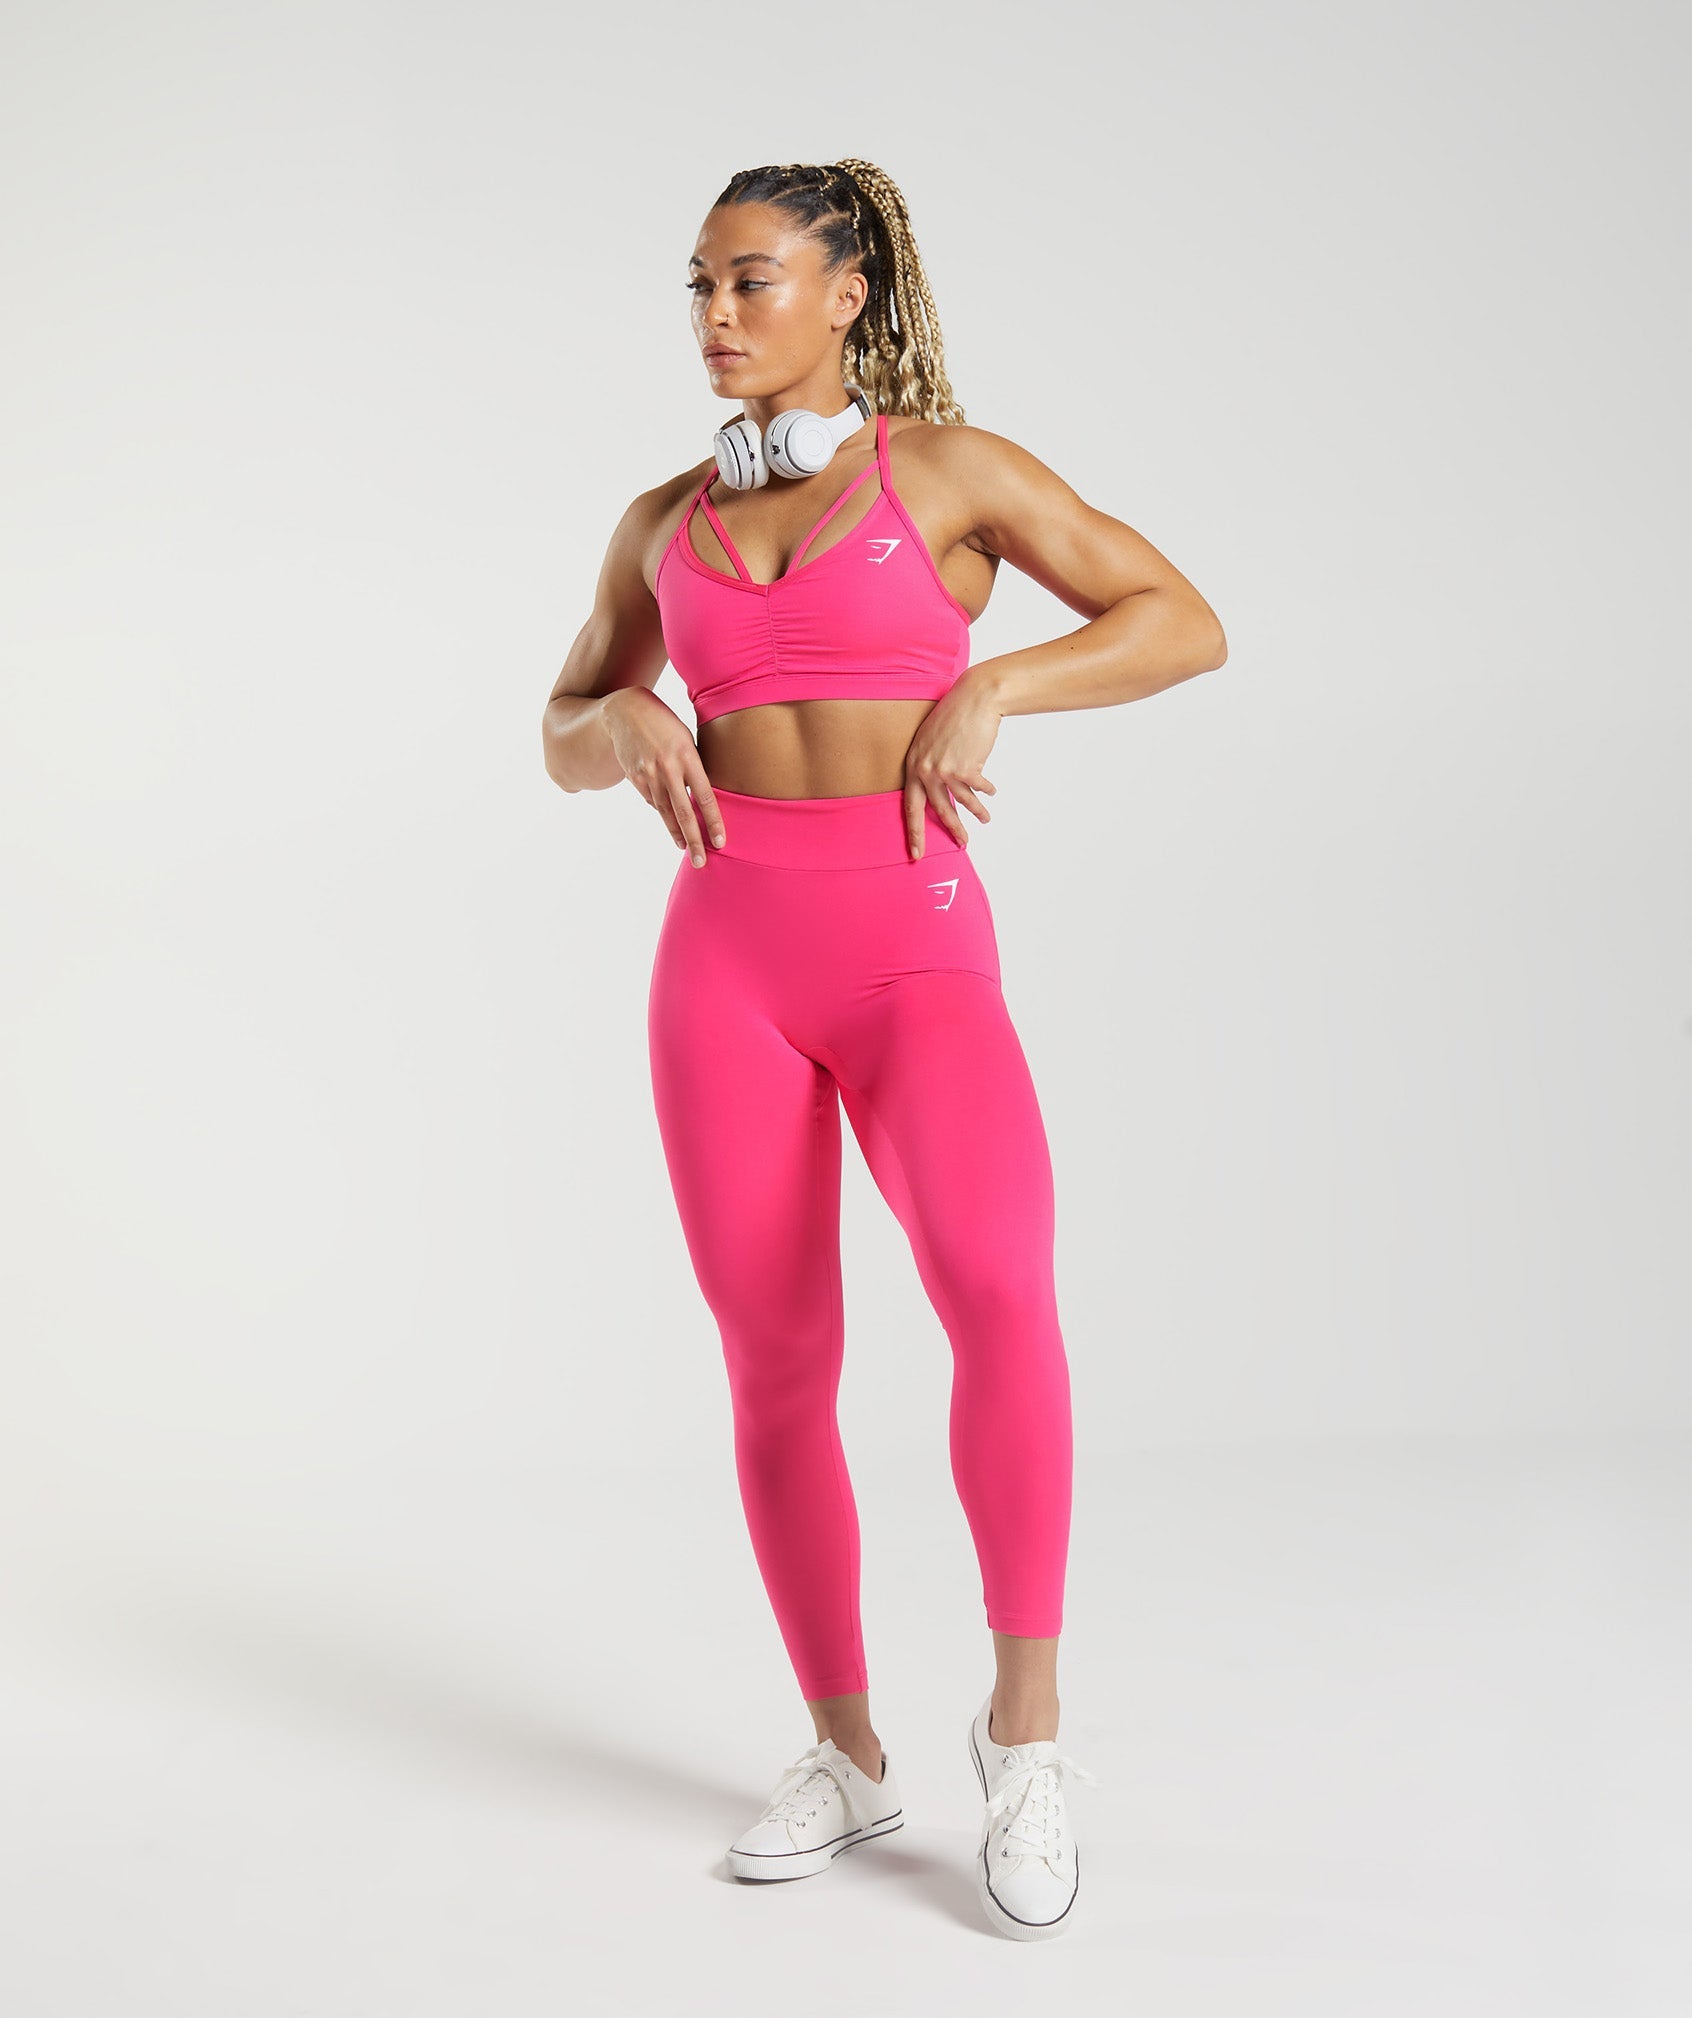 Guzom Sports Brass for Women Medium Support Crop Bras Active Yoga Fitness  Braslettes Clearance- Hot Pink Size XL 